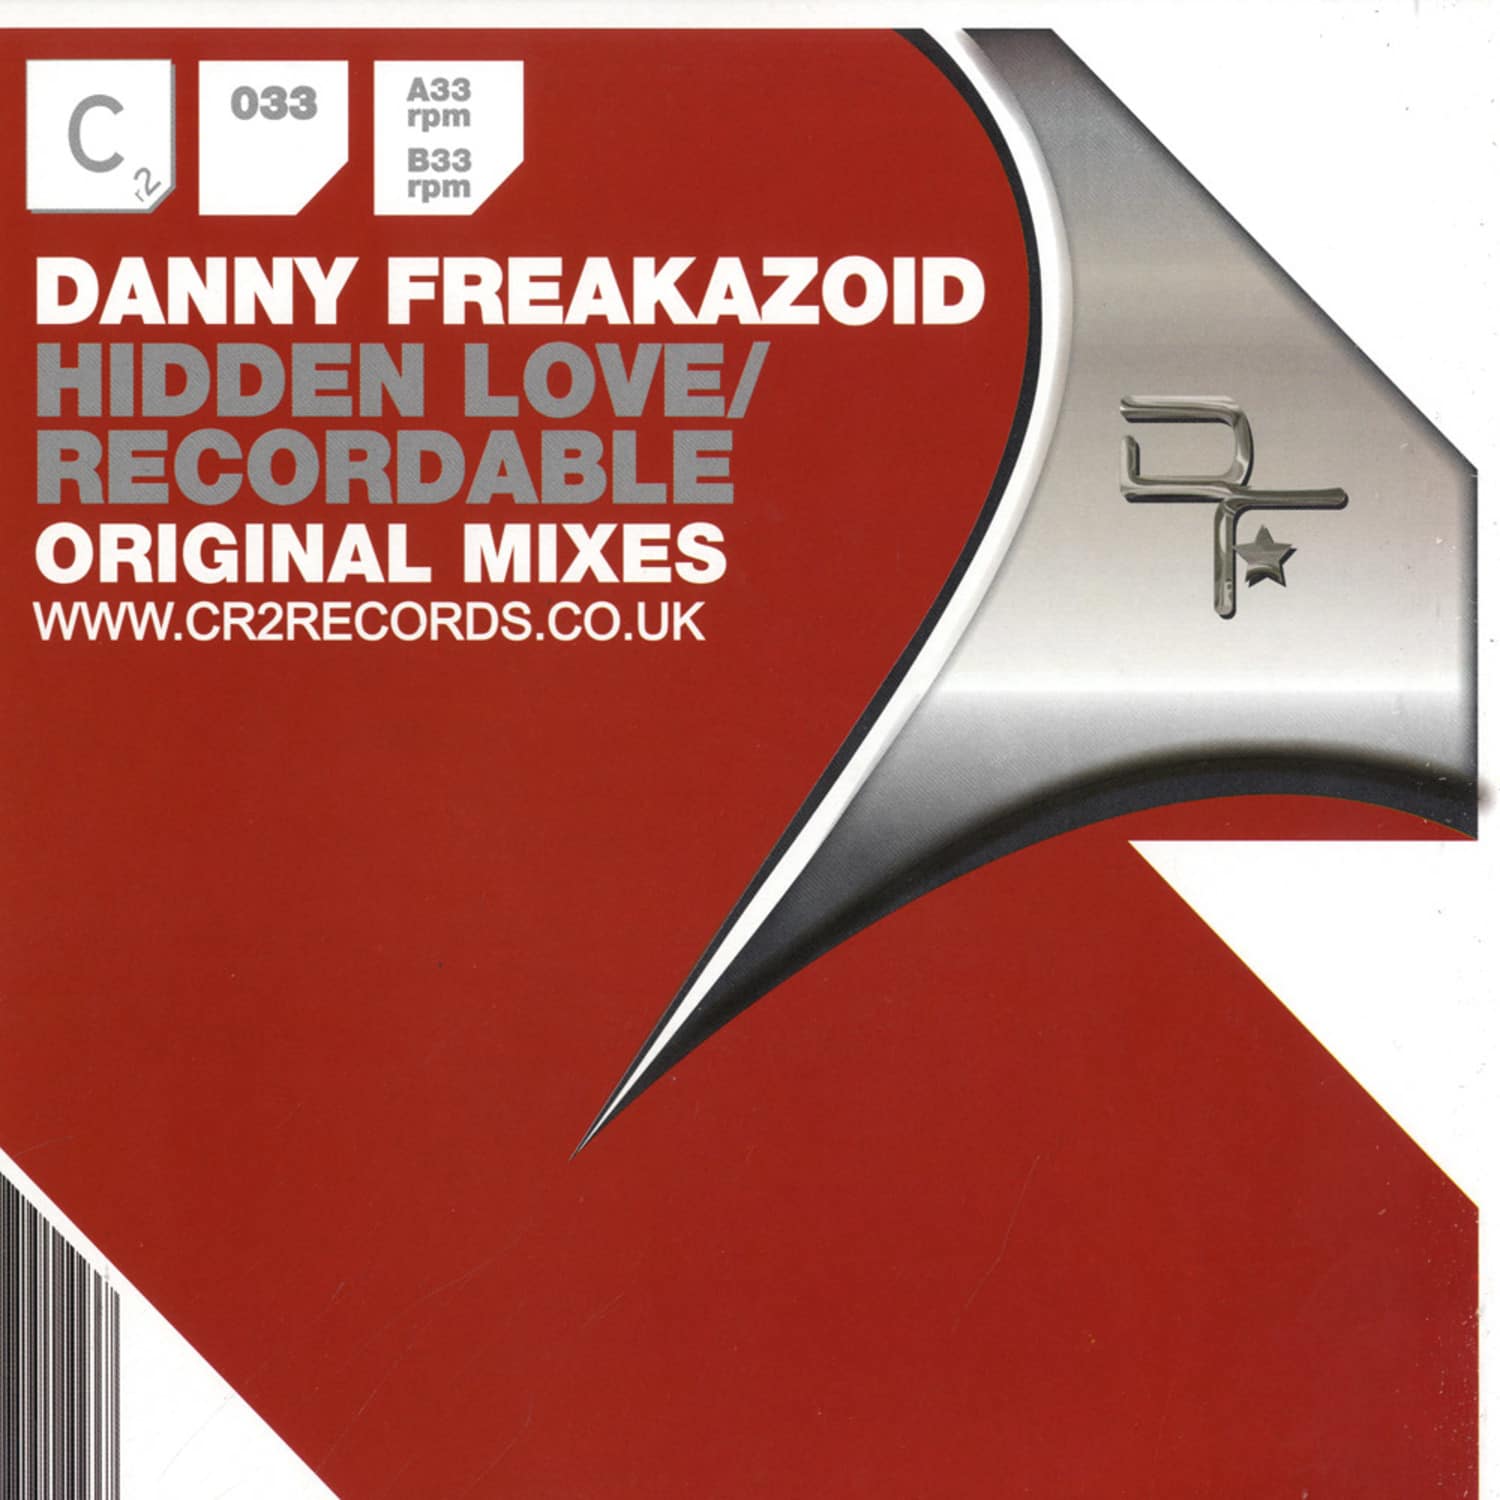 Danny Freakazoid - HIDDEN LOVE / RECORDABLE